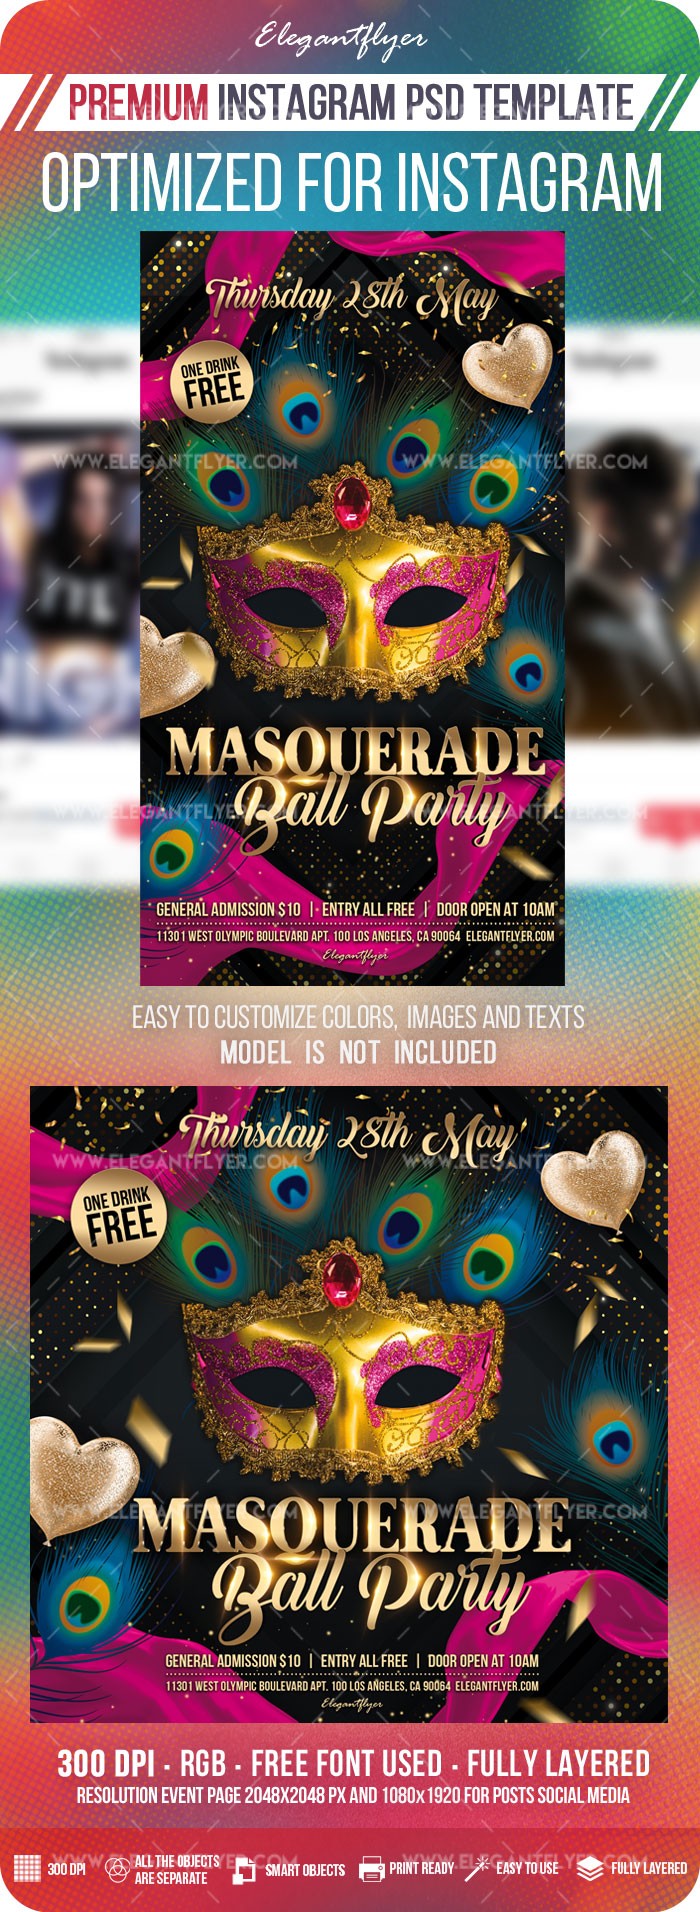 Masquerade Ball Party Instagram by ElegantFlyer